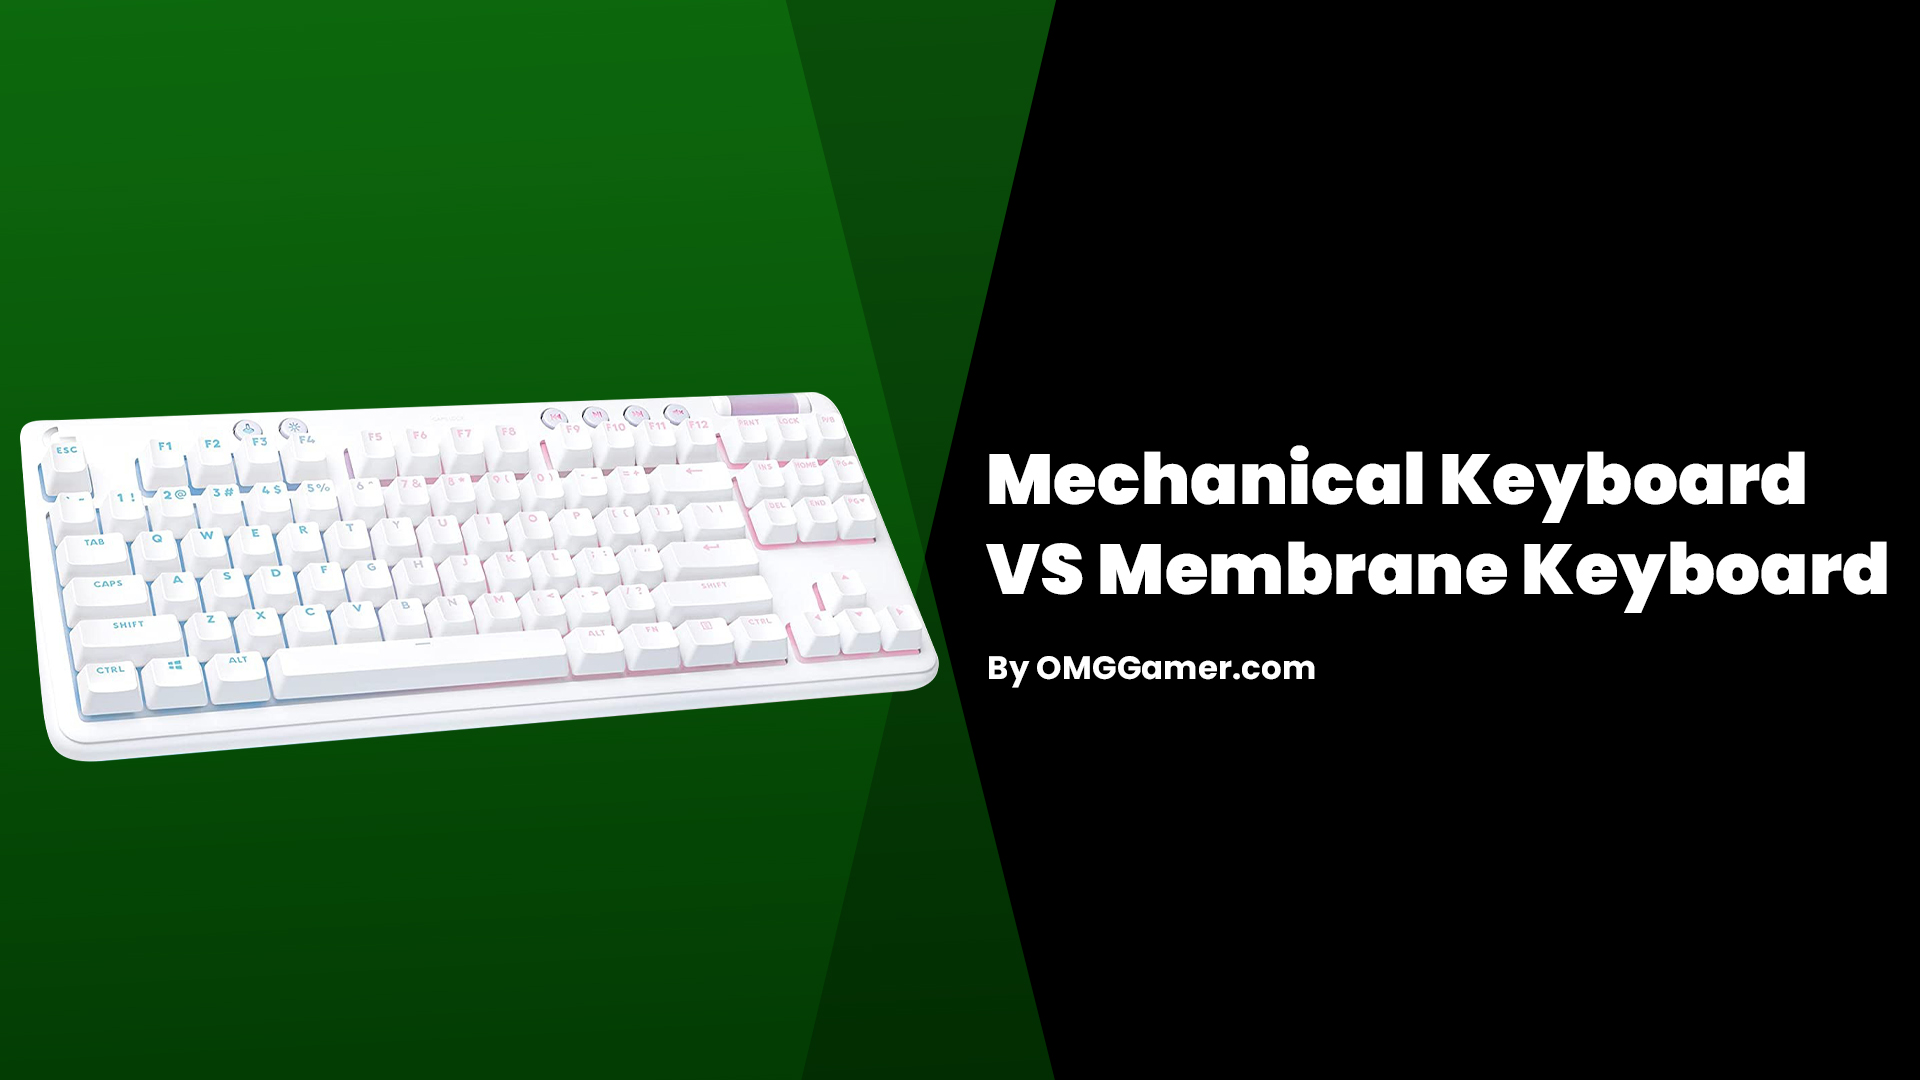 Mechanical Keyboard VS Membrane Keyboard